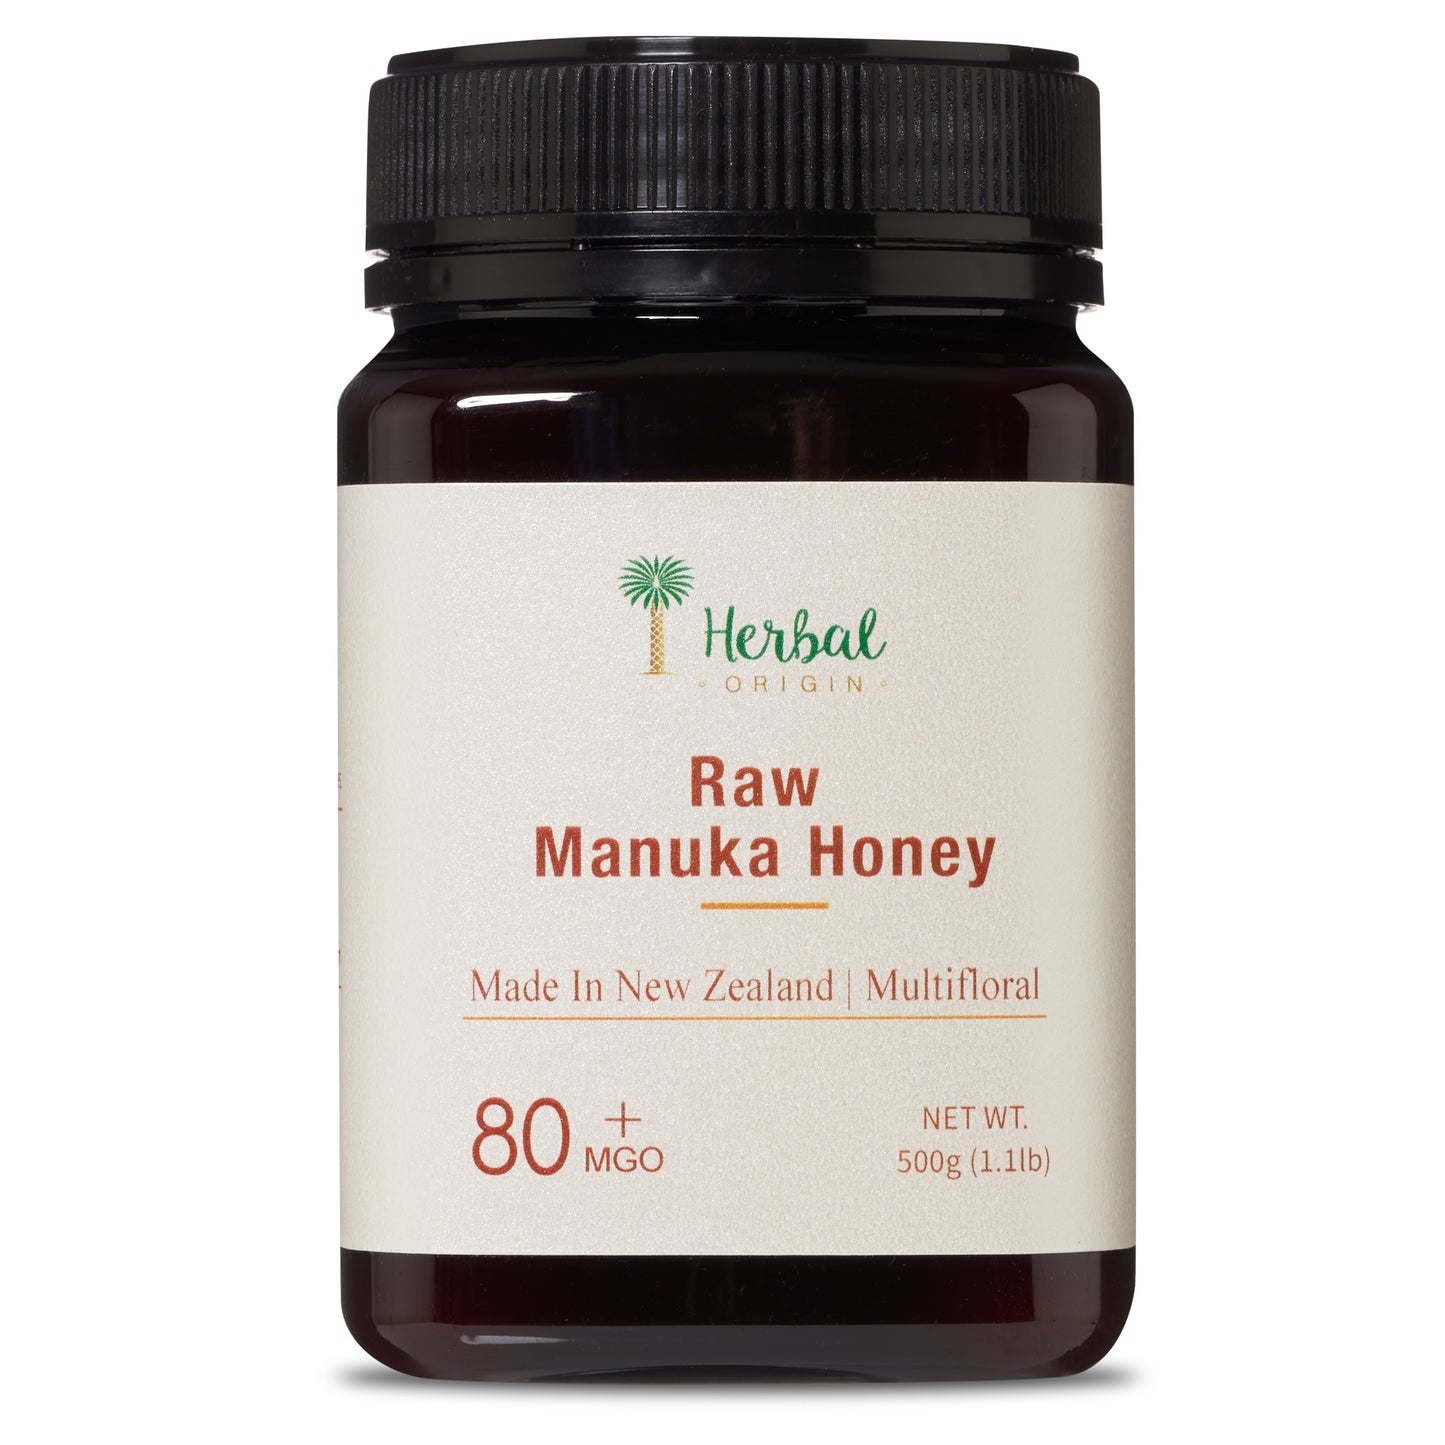 Manuka Raw Honey | MGO 80+ Multifloral Raw Manuka Honey New Zealand - Authentic Non-GMO Pure Honey | 1.1lb Raw Manuka Honey